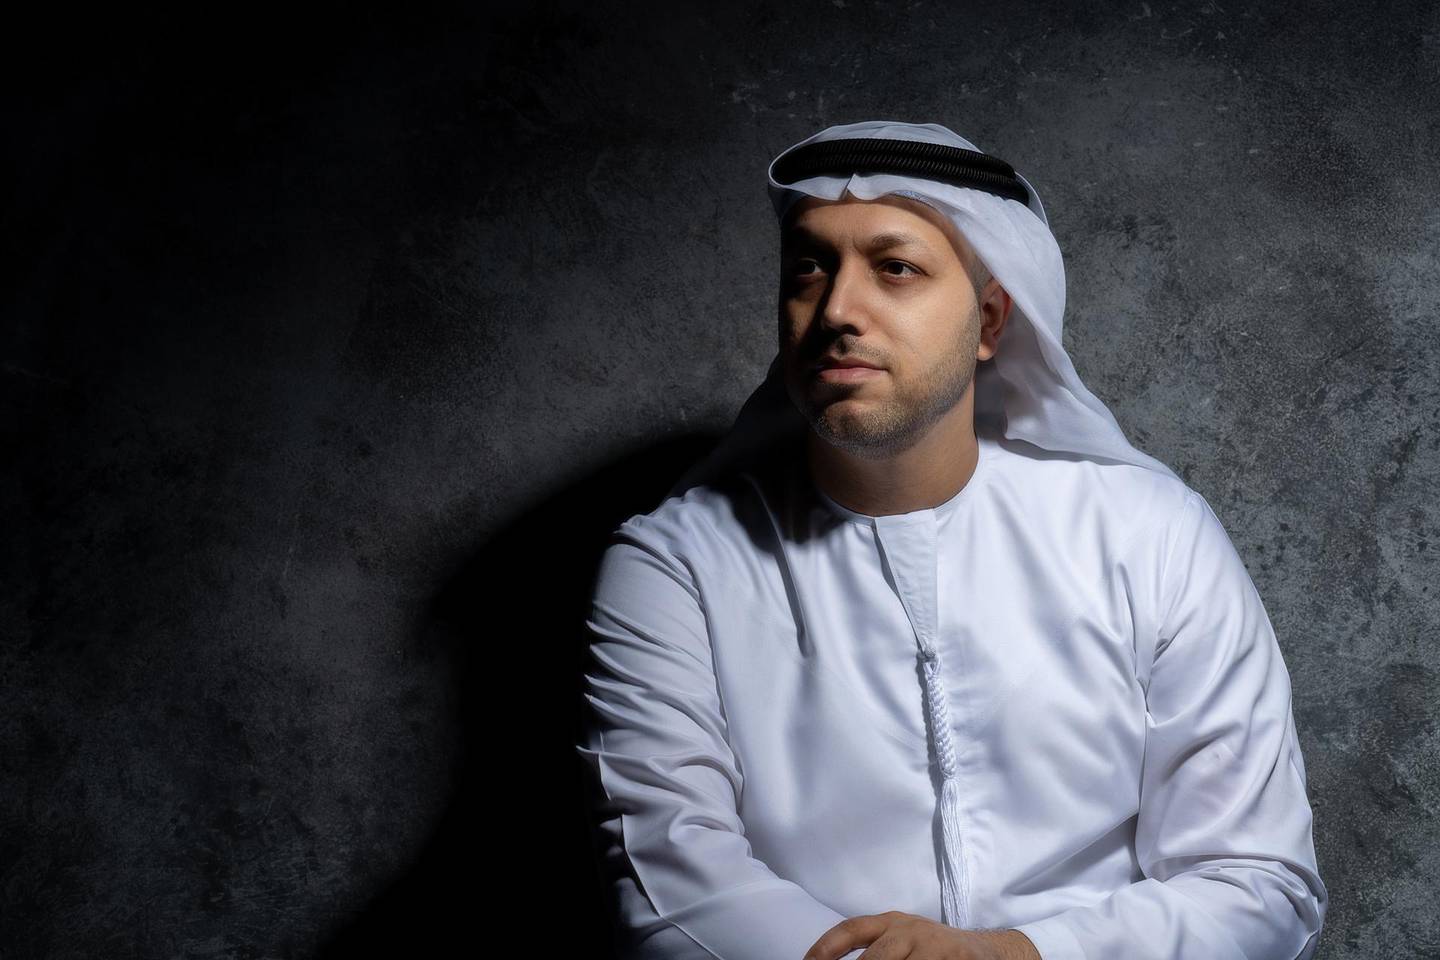 Emirati composer Ihab Darwish